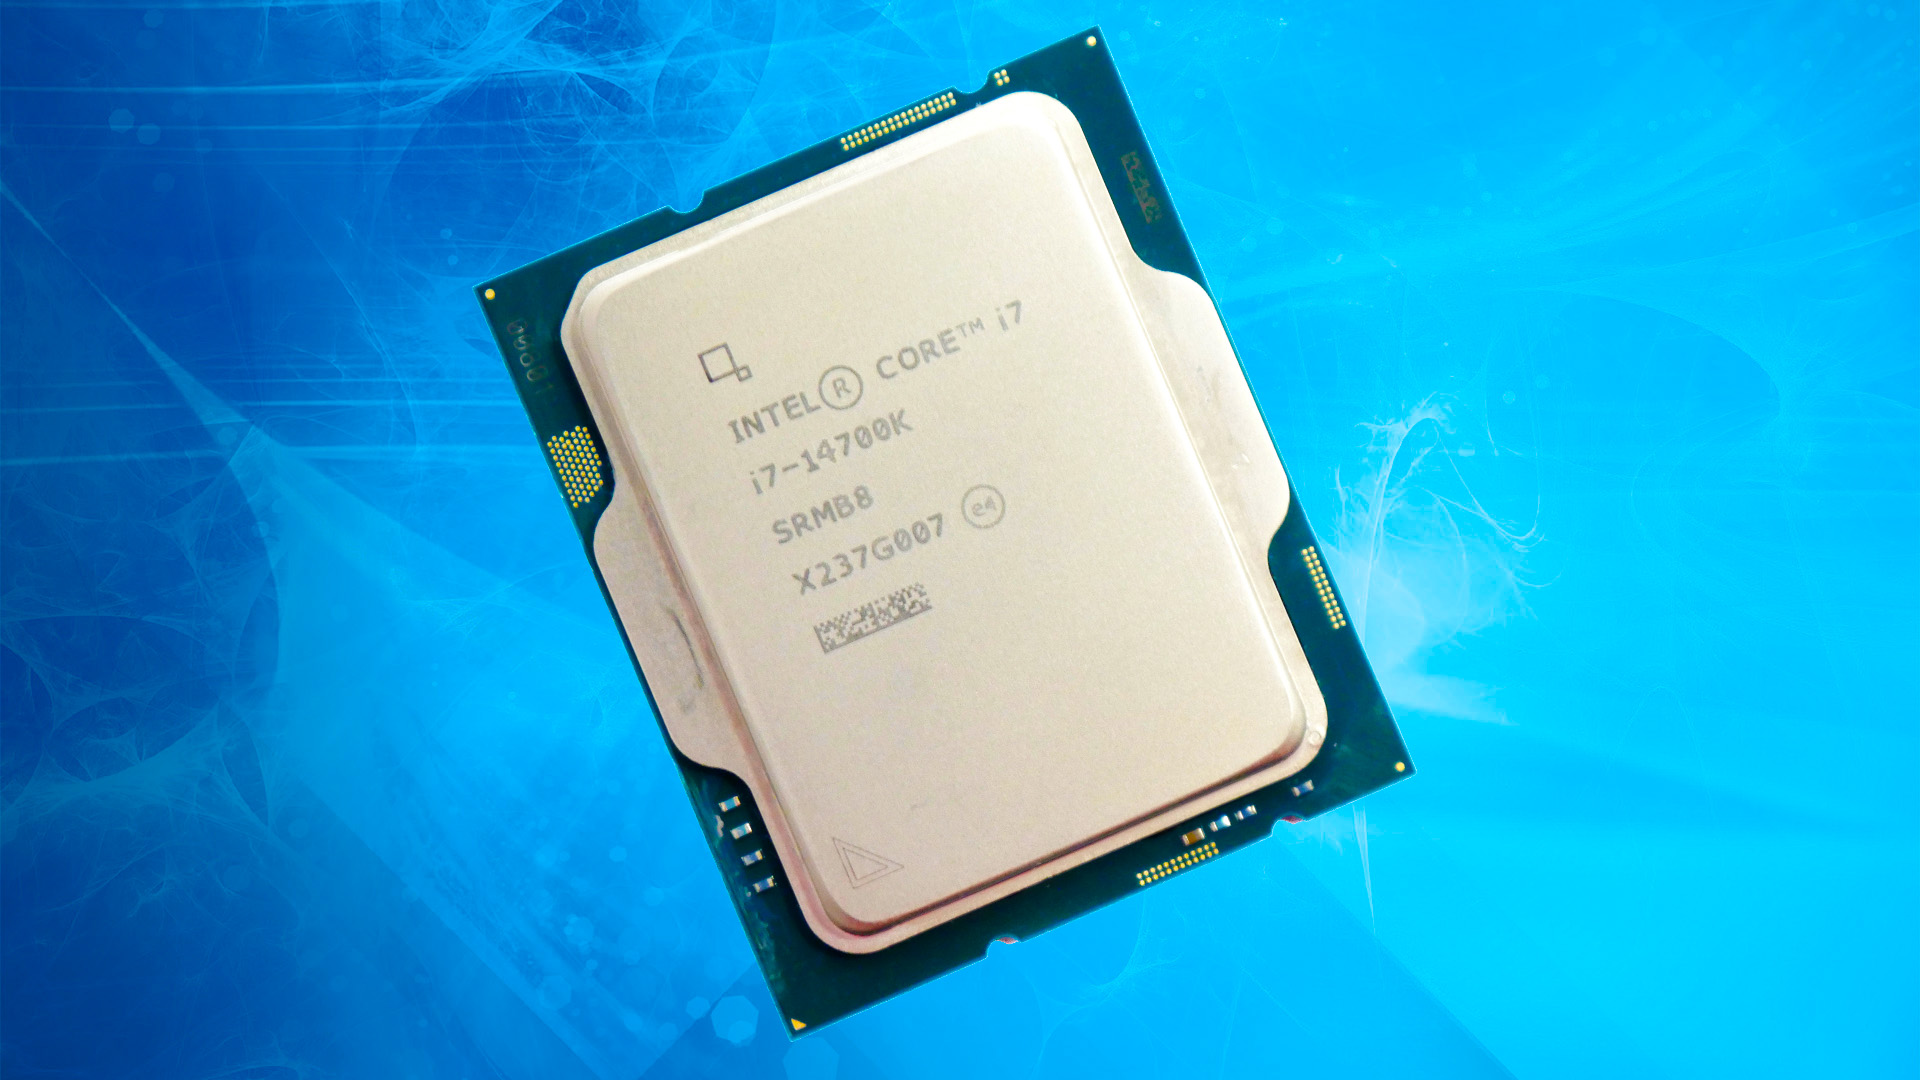 Intel CORE i7-14700KF / i7-14700K 14th Gen